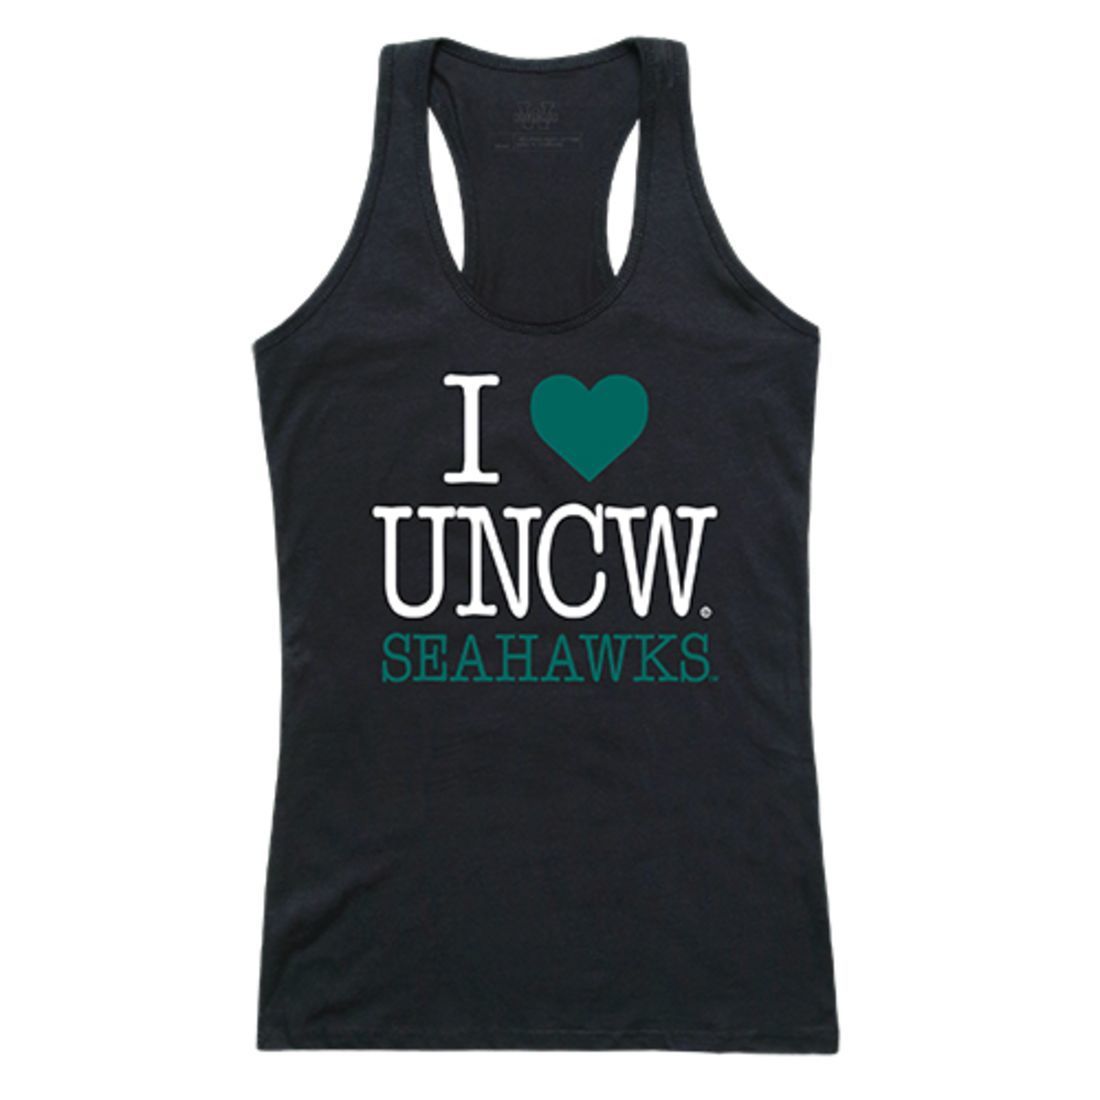 UNCW University of North Carolina at Wilmington Seahawks Womens Love Tank Top Tee T-Shirt Black-Campus-Wardrobe